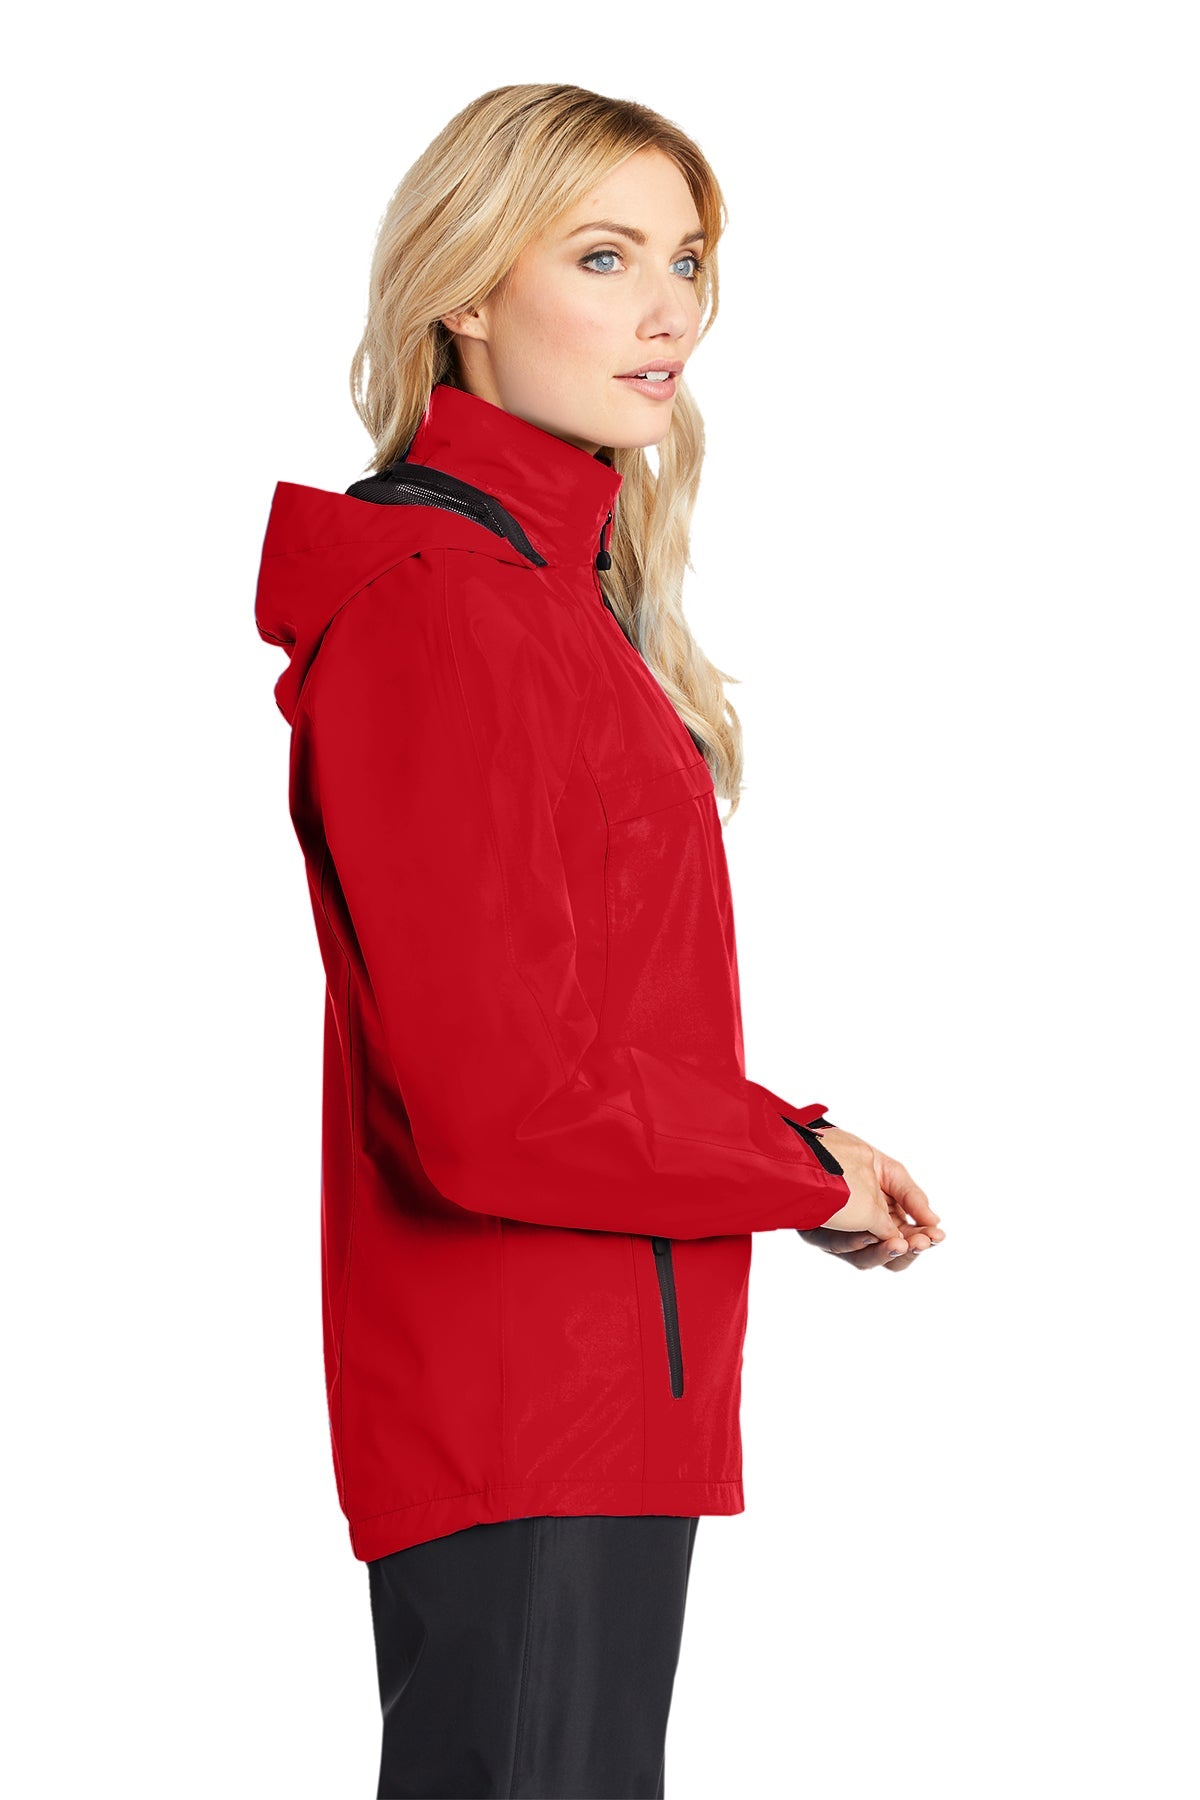 Port Authority Ladies Torrent Customized Waterproof Jackets, Deep Red